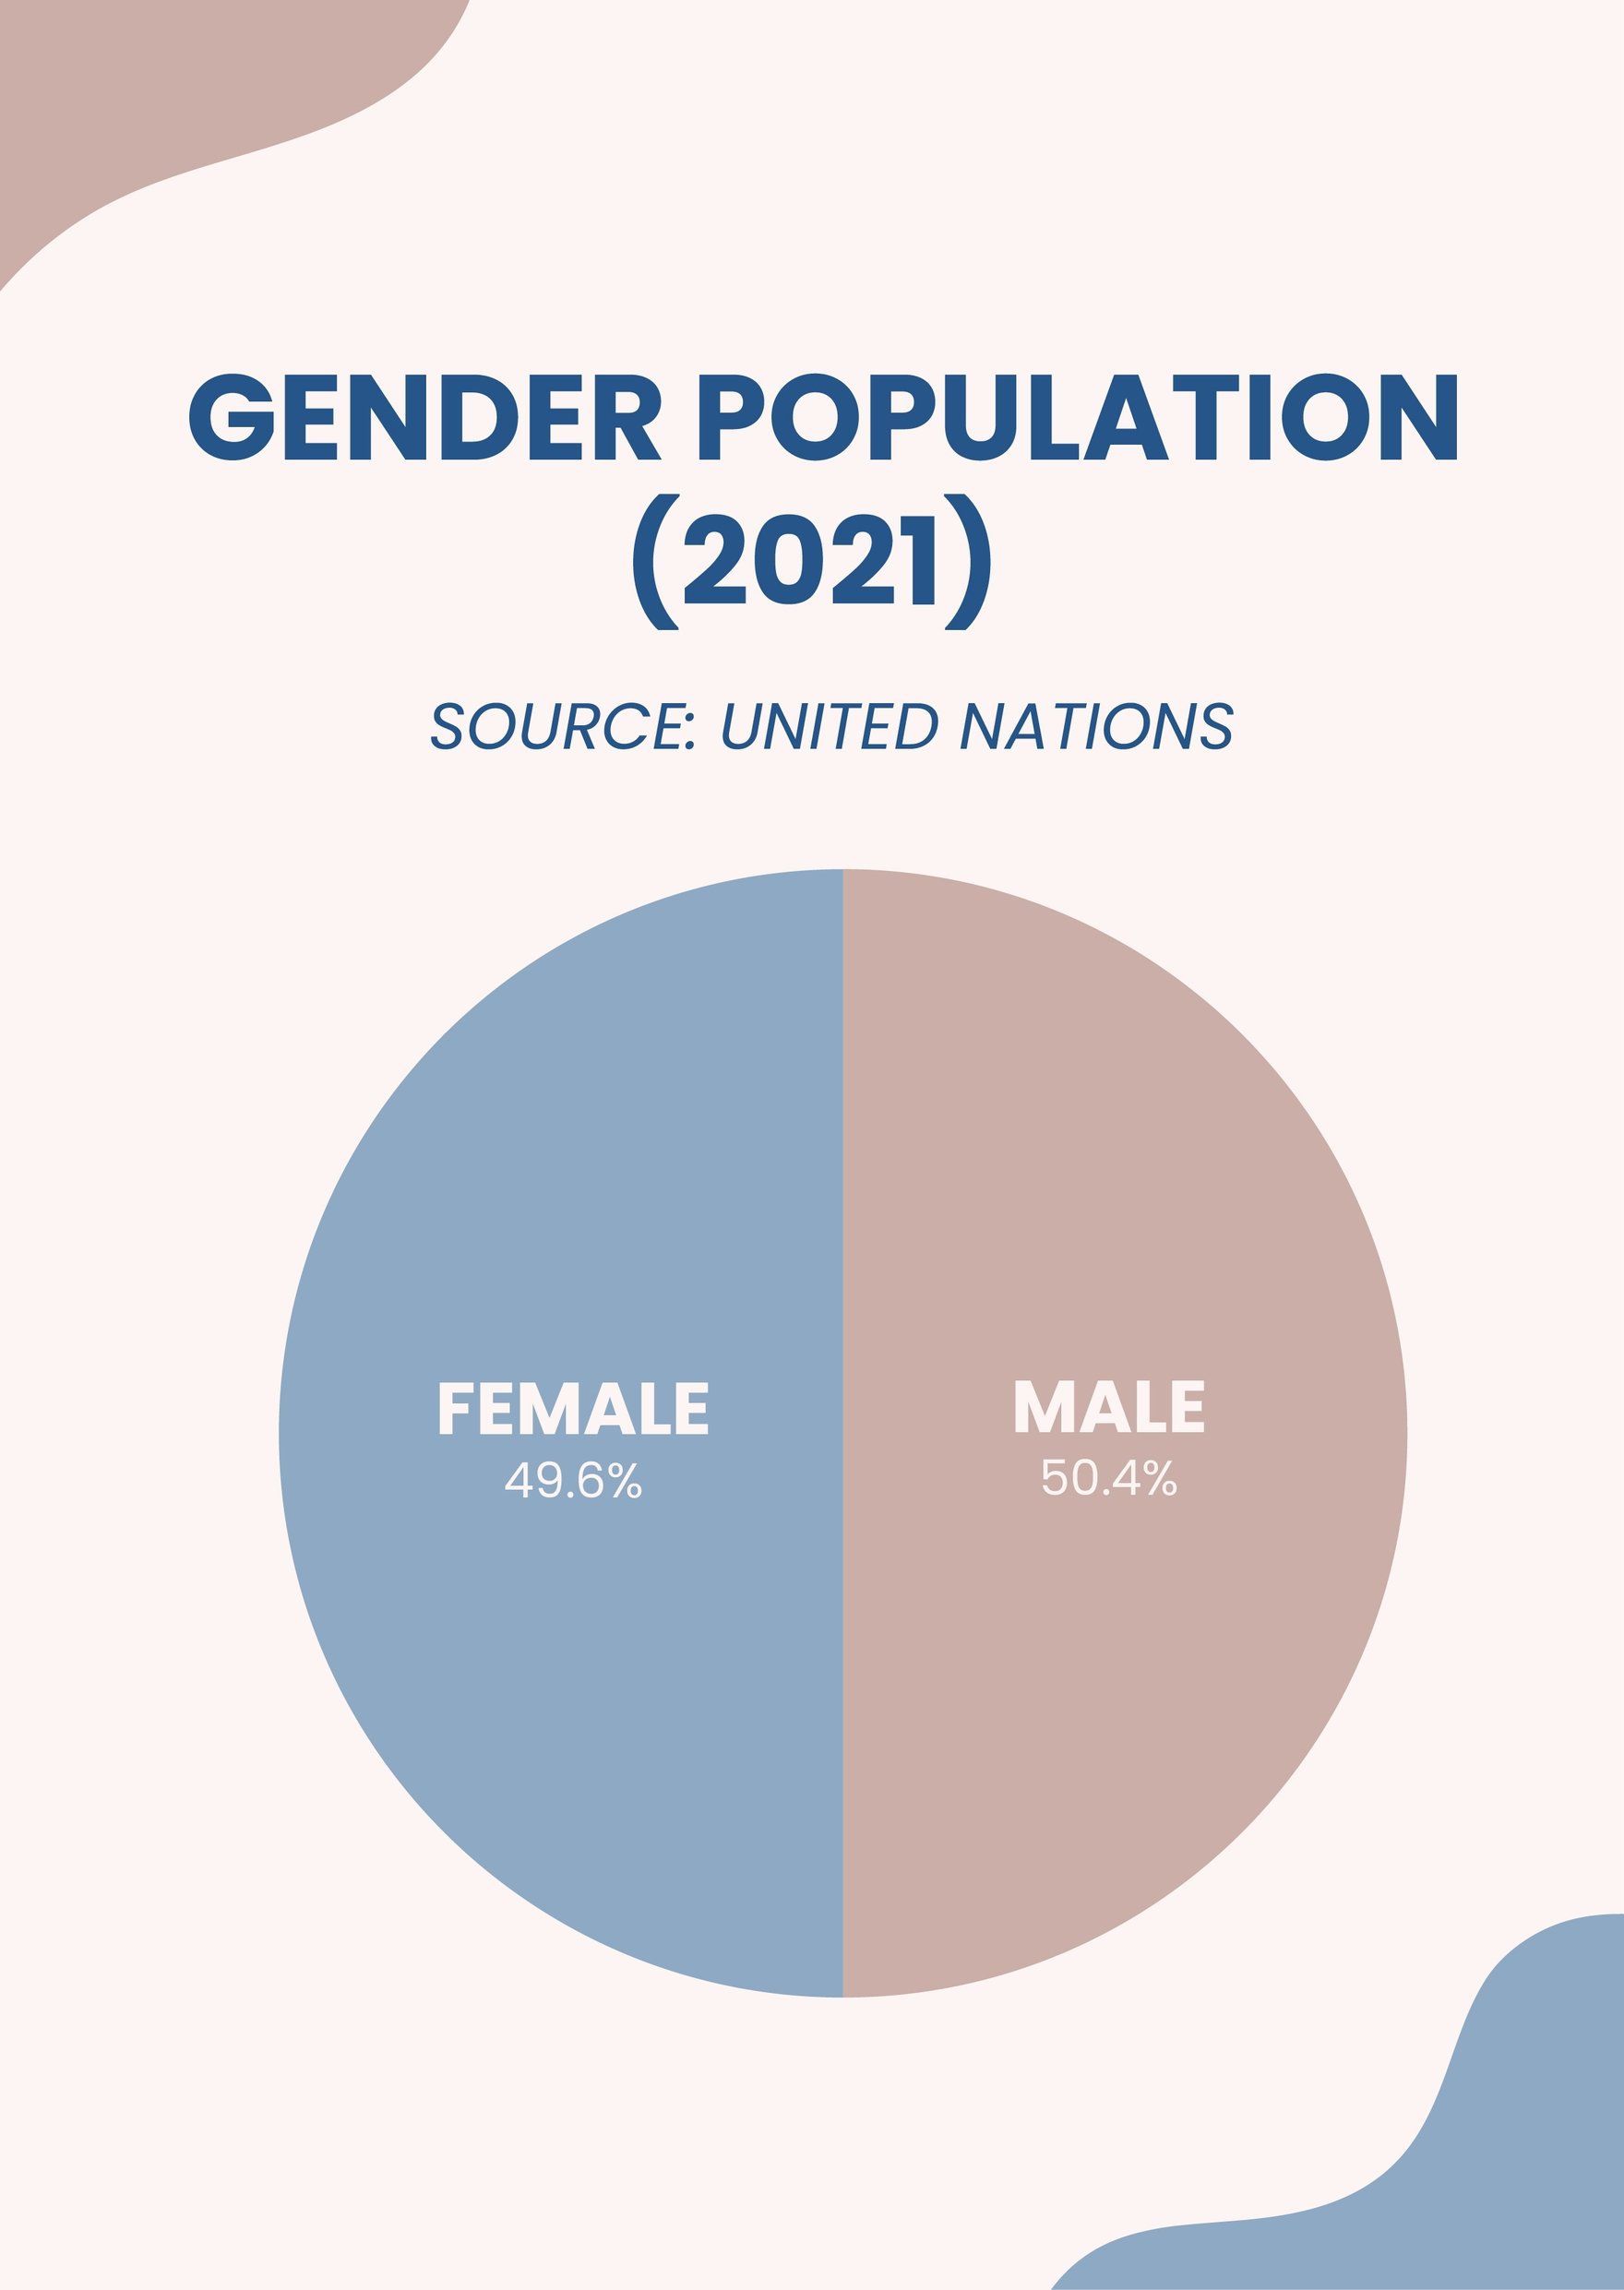 Gender Pie Chart in Illustrator, PDF Download